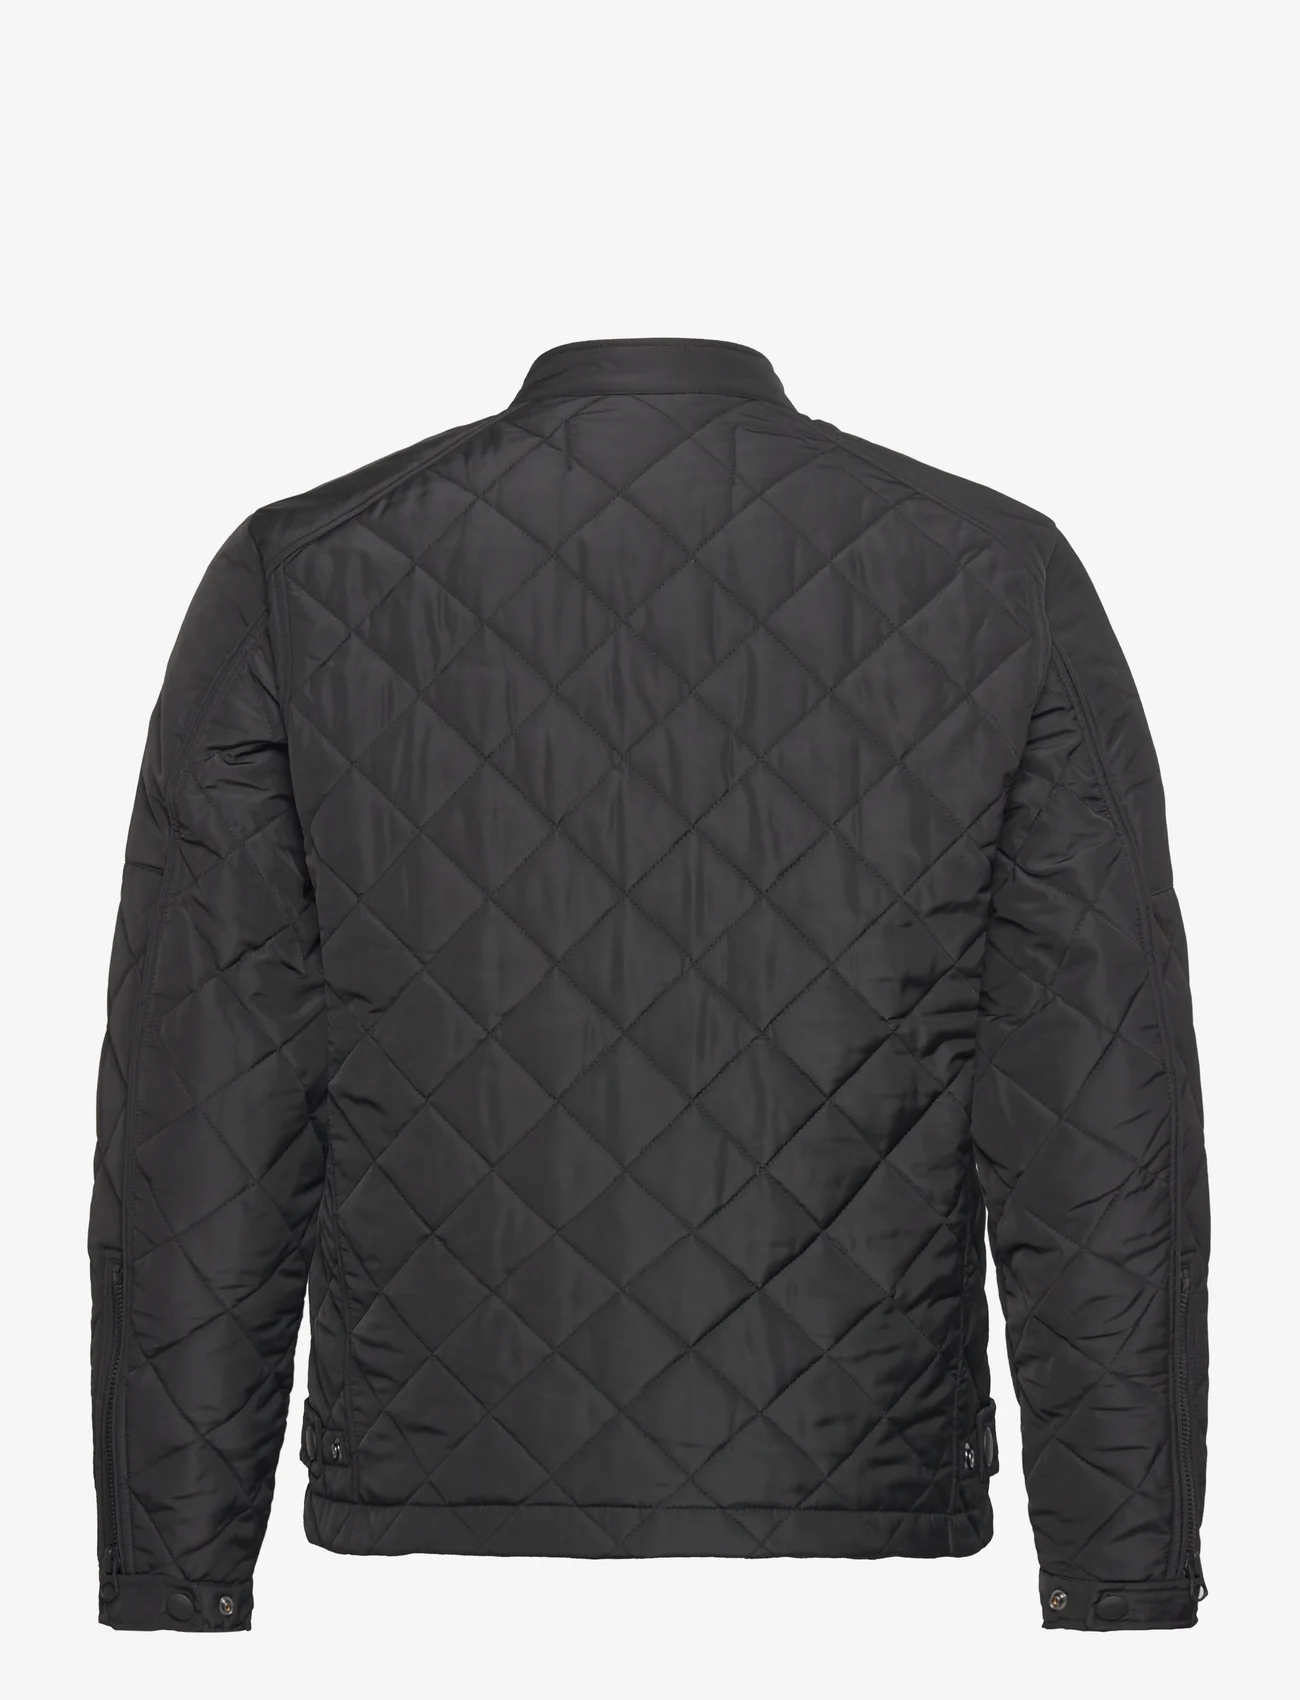 Replay - Jacket REGULAR - spring jackets - black - 1